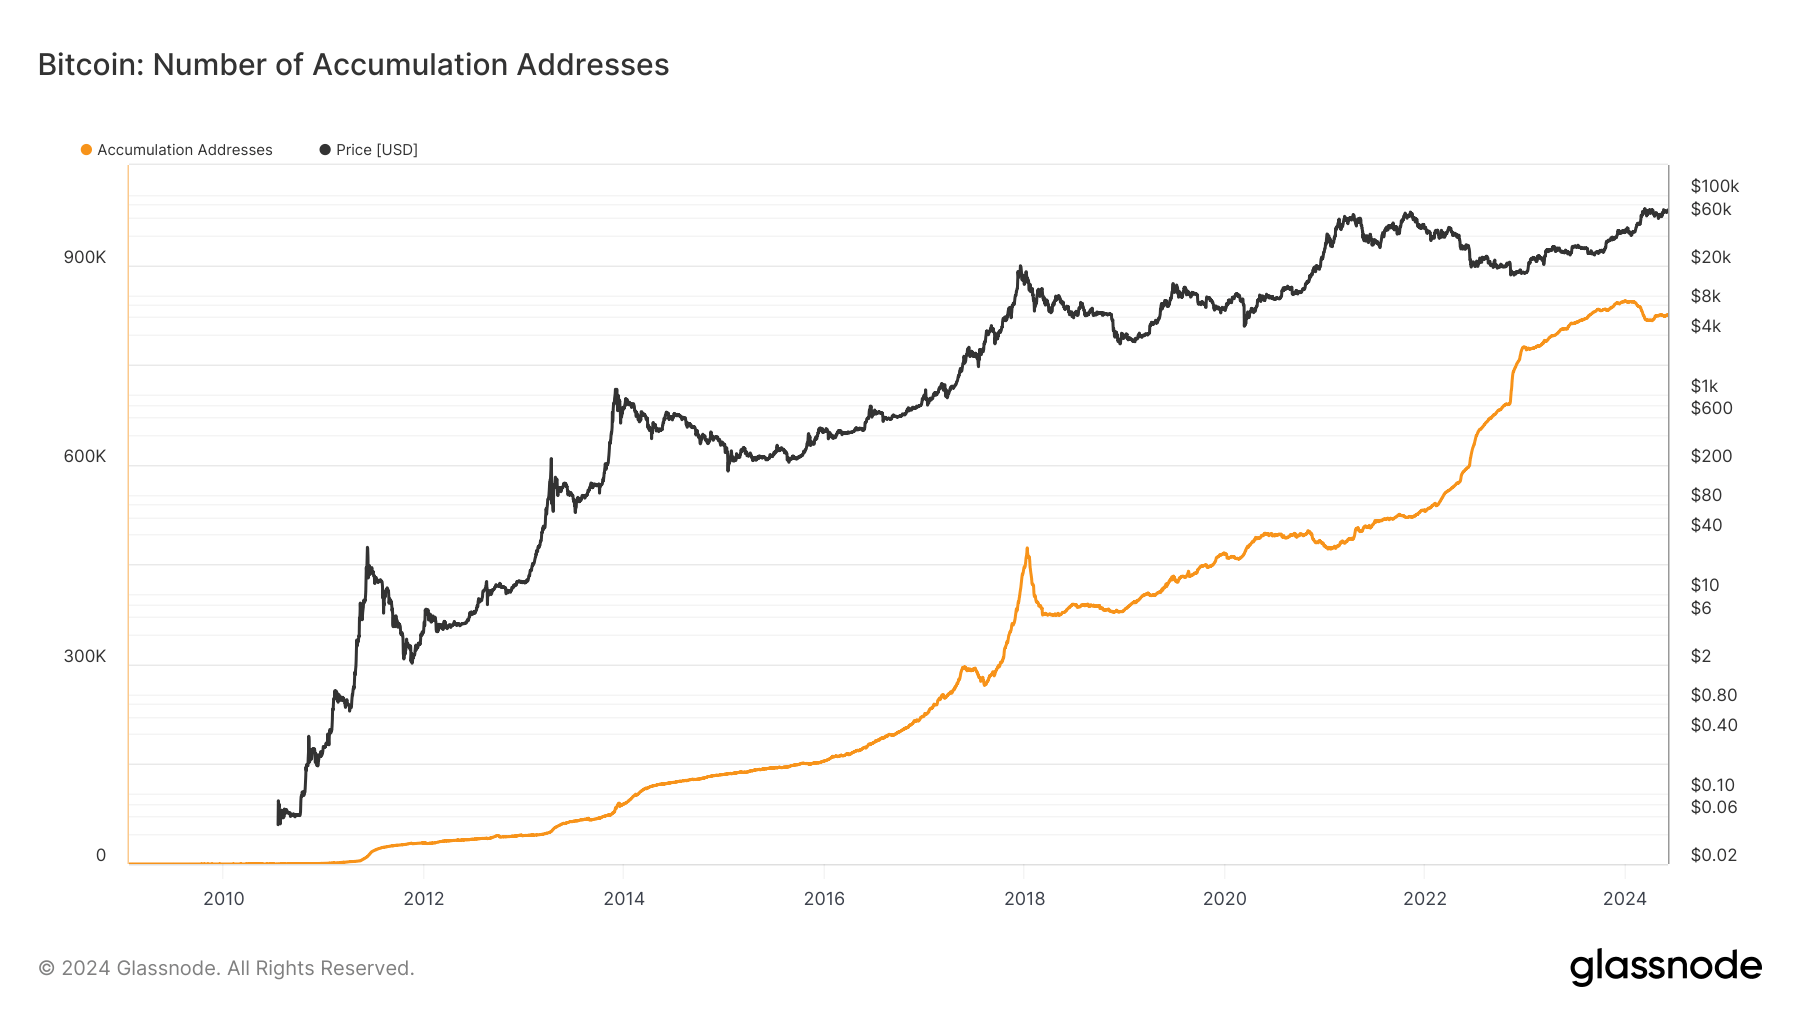 Bitcoin accumulation addresses surge as market optimism returns